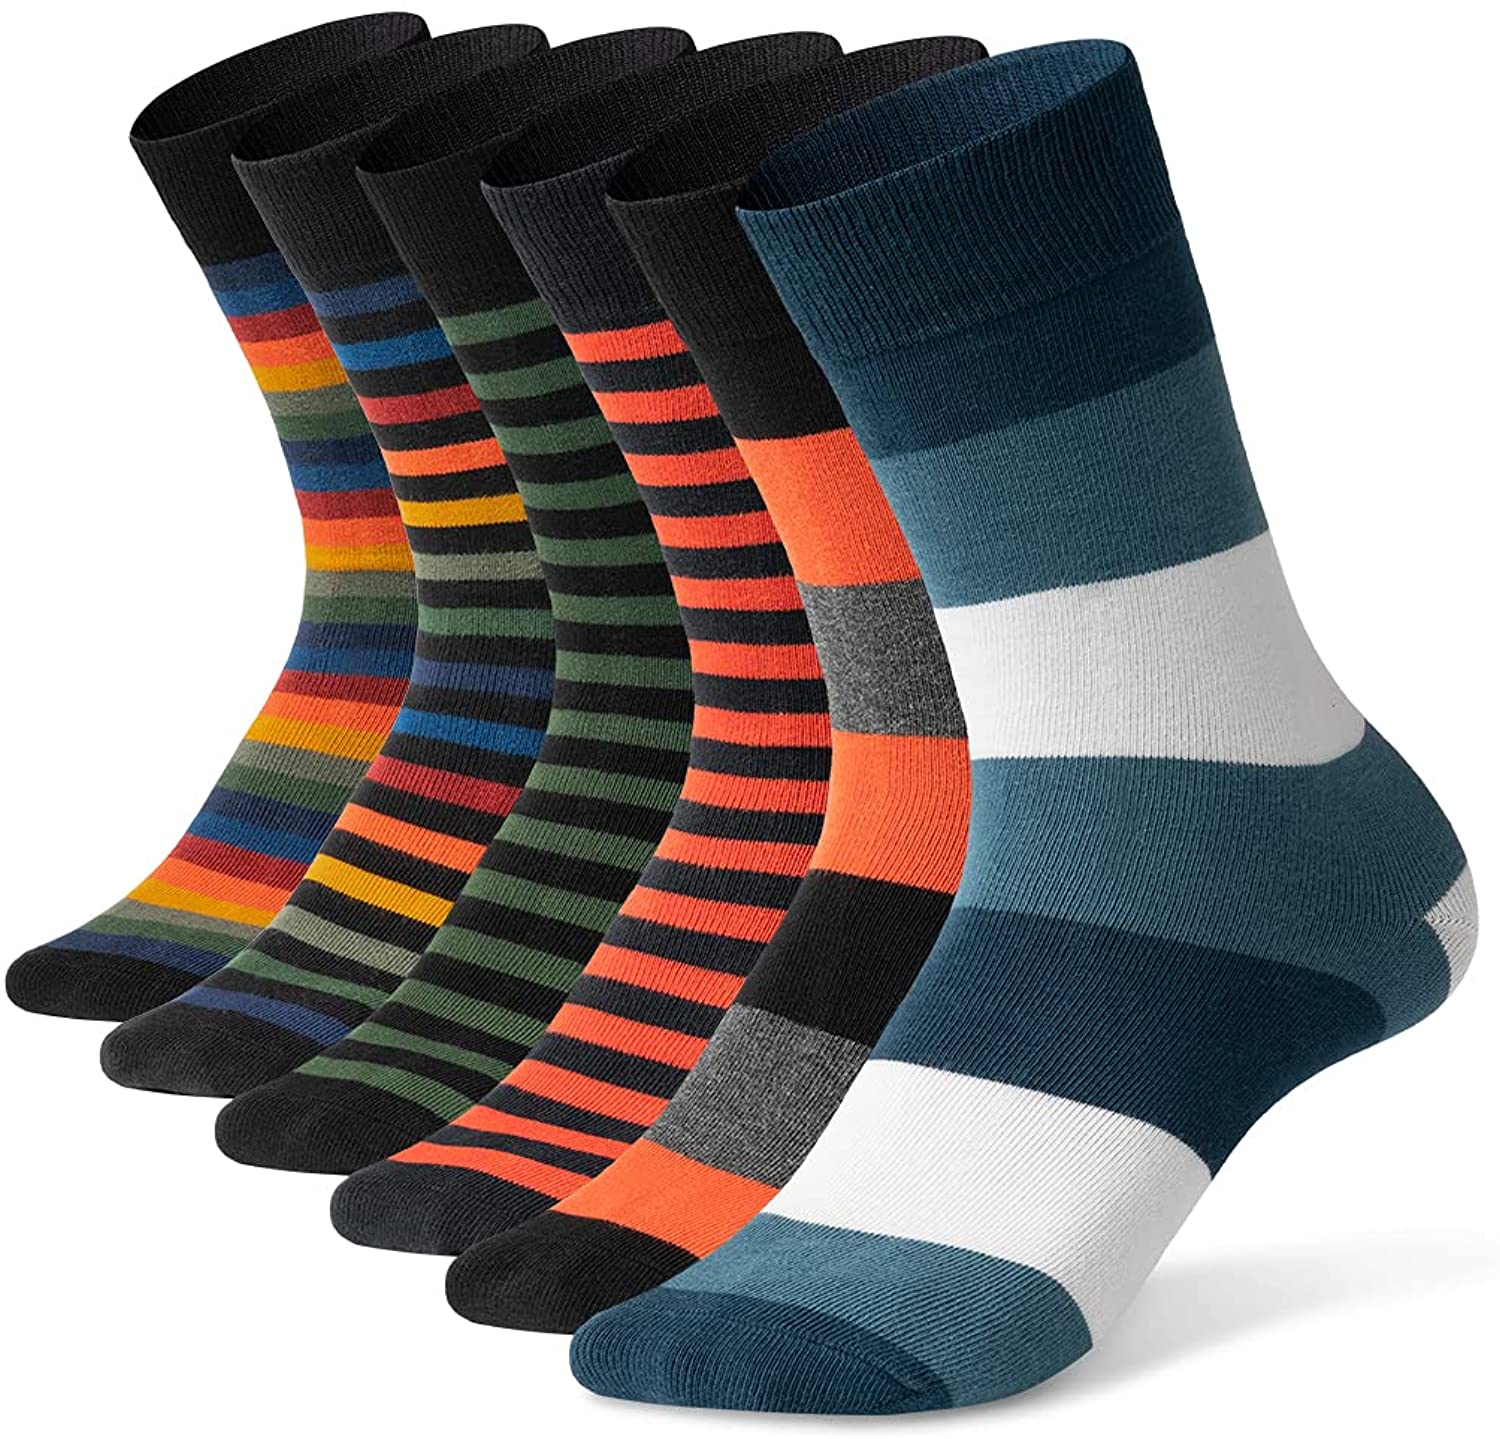 vo cotton sang mau - David Archy multicolored socks 